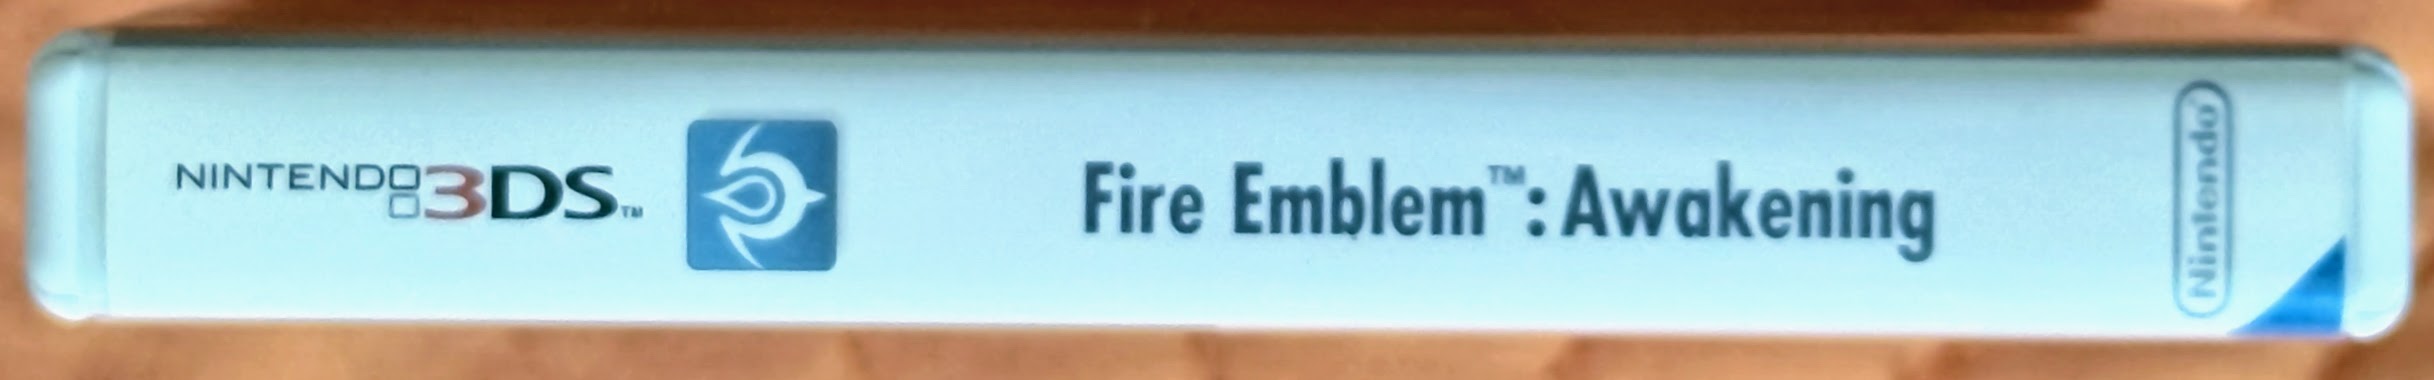 Fire Emblem: Awakening, dorso